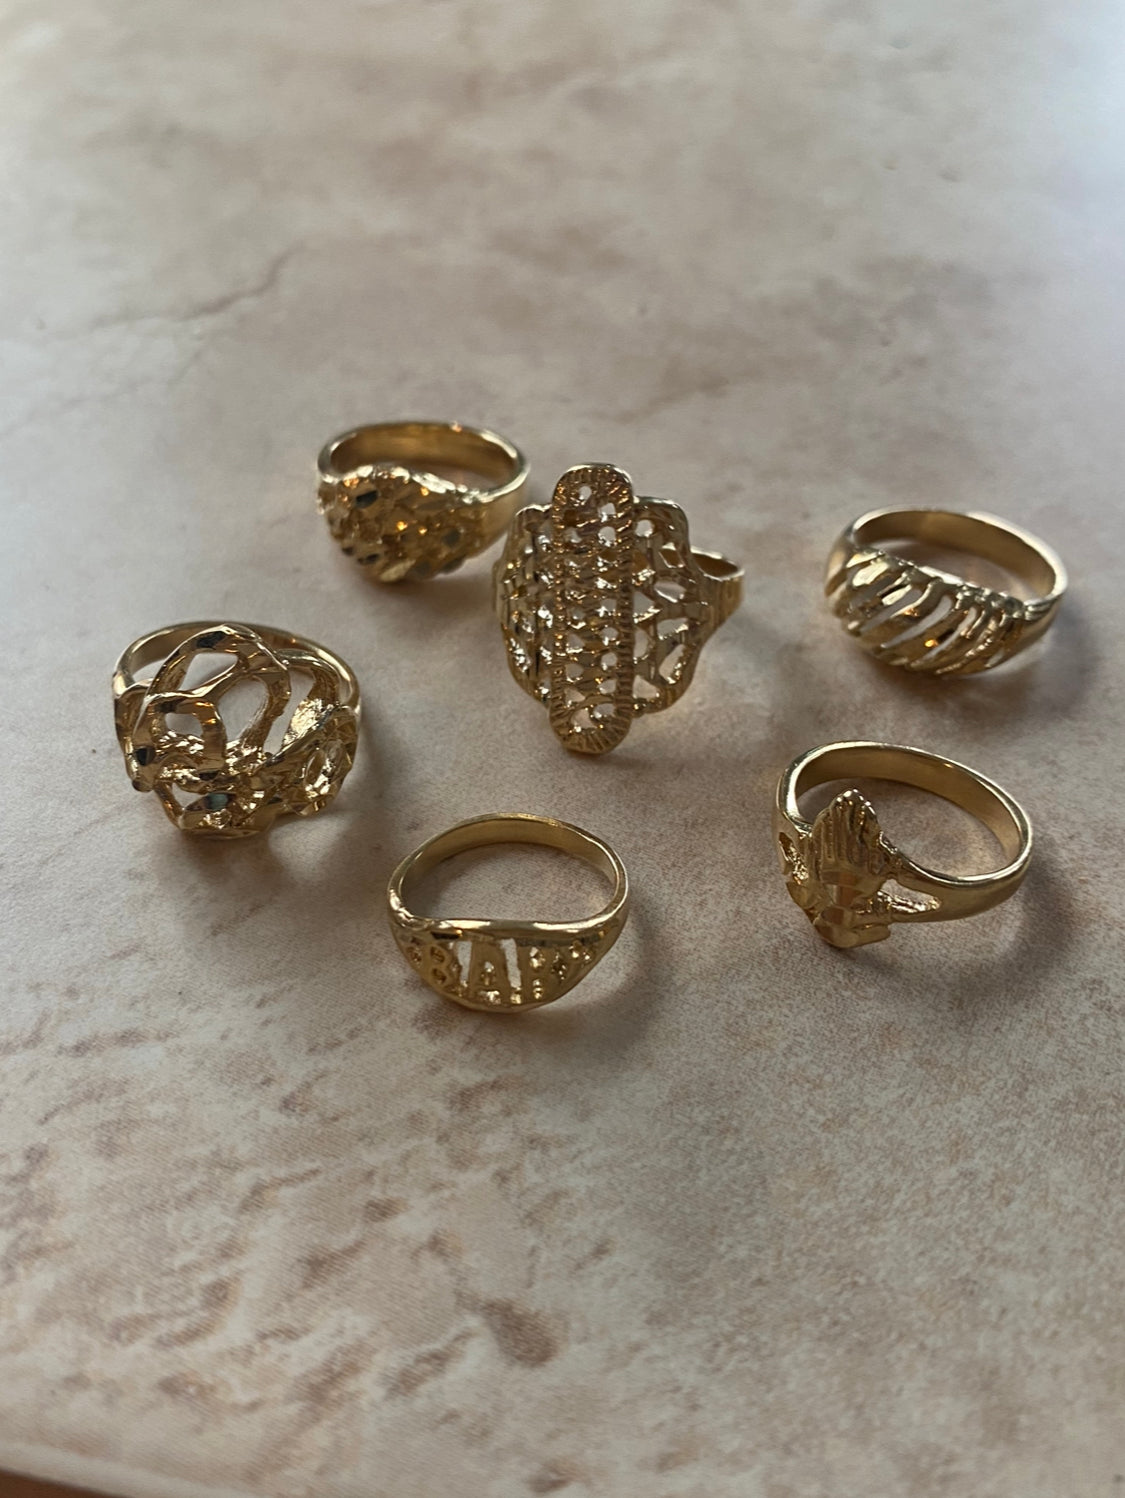 Mens Arabic Beautiful Gold and Silver Ring | eBay